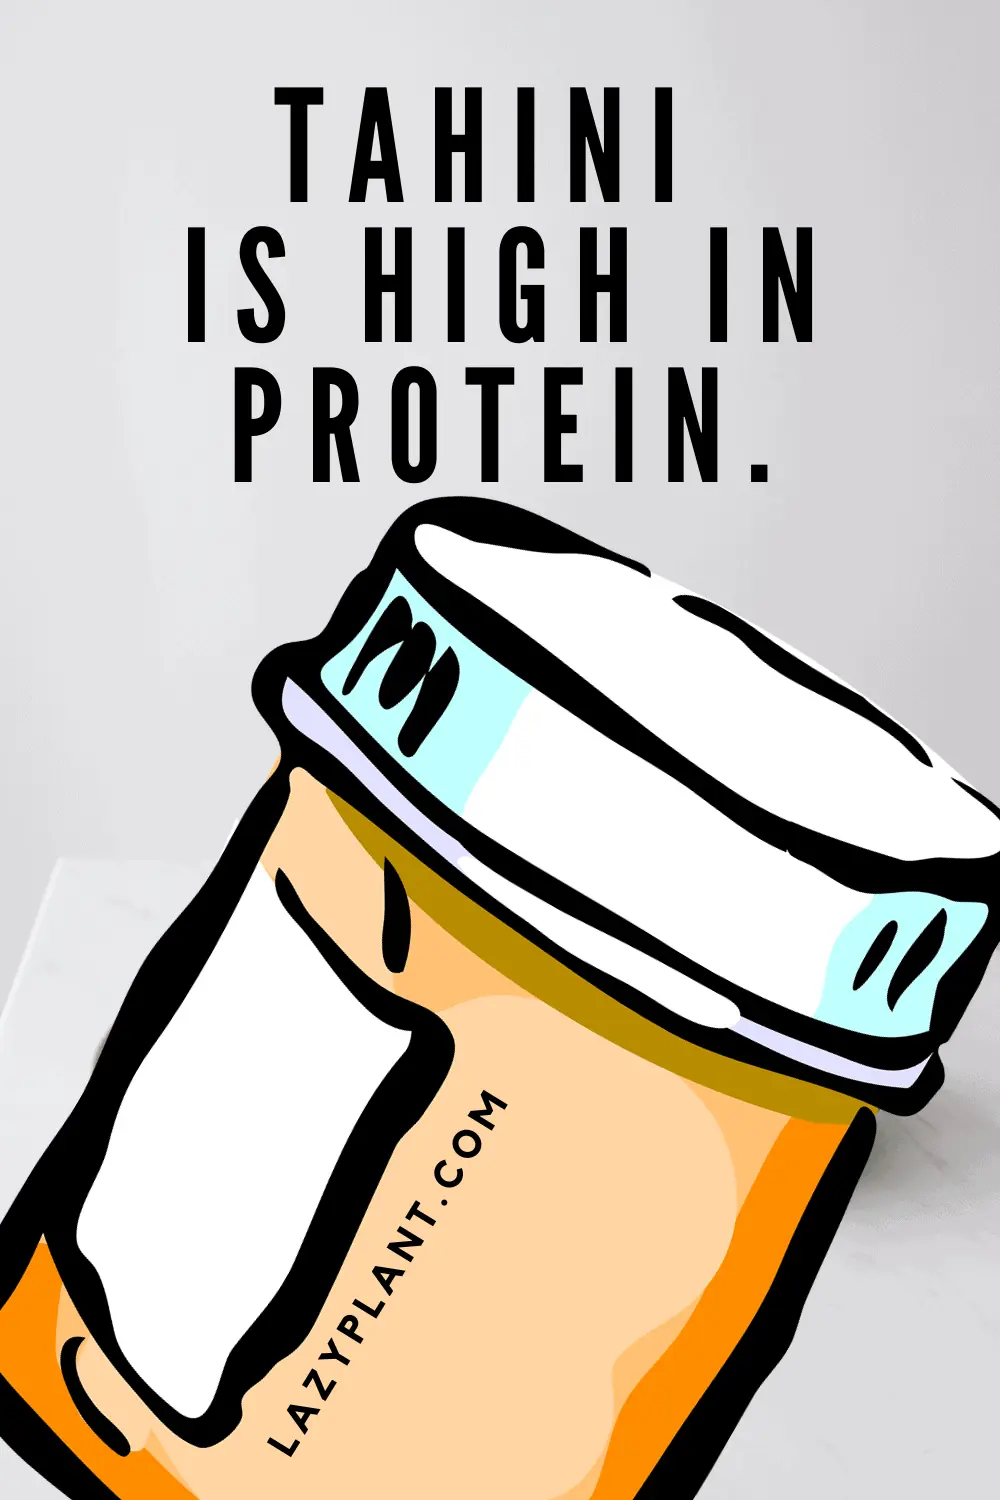 Tahini is vegan food high in protein!